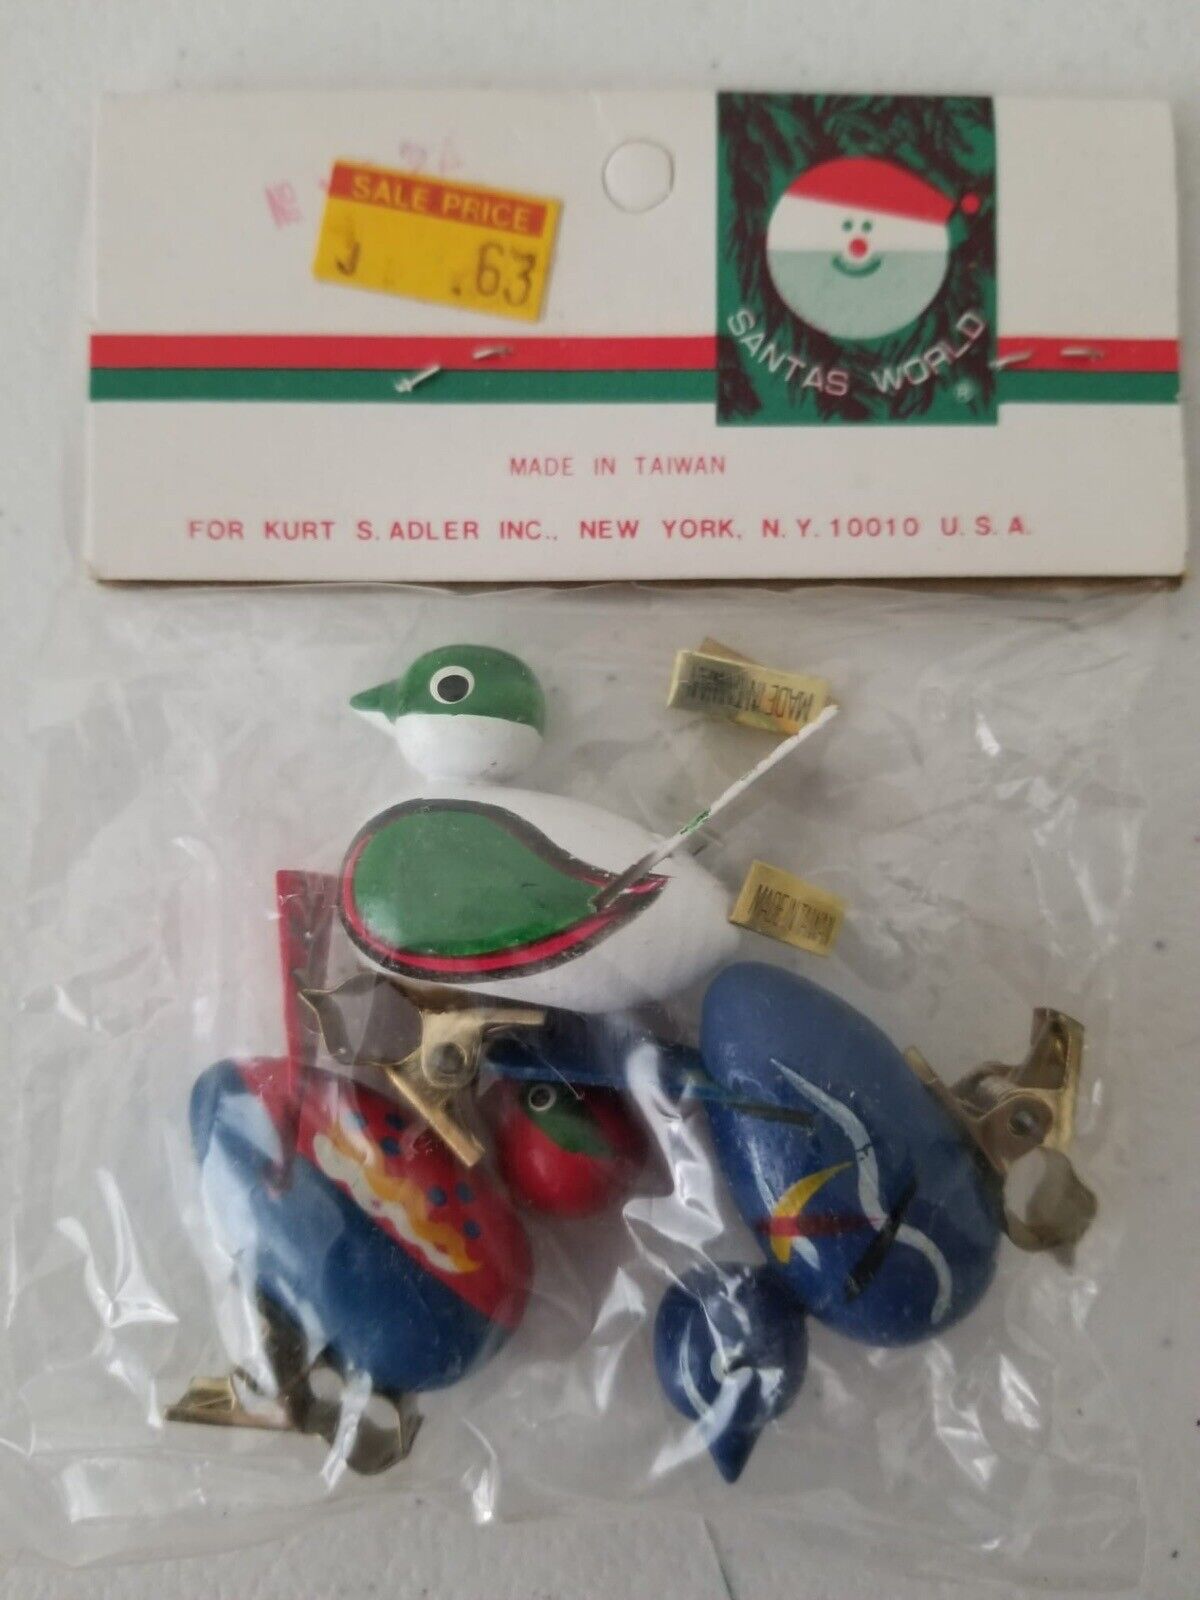 Vintage Sealed Christmas Elf Figurine Ornaments from Taiwan - Retro Holiday Decor Set - TreasuTiques